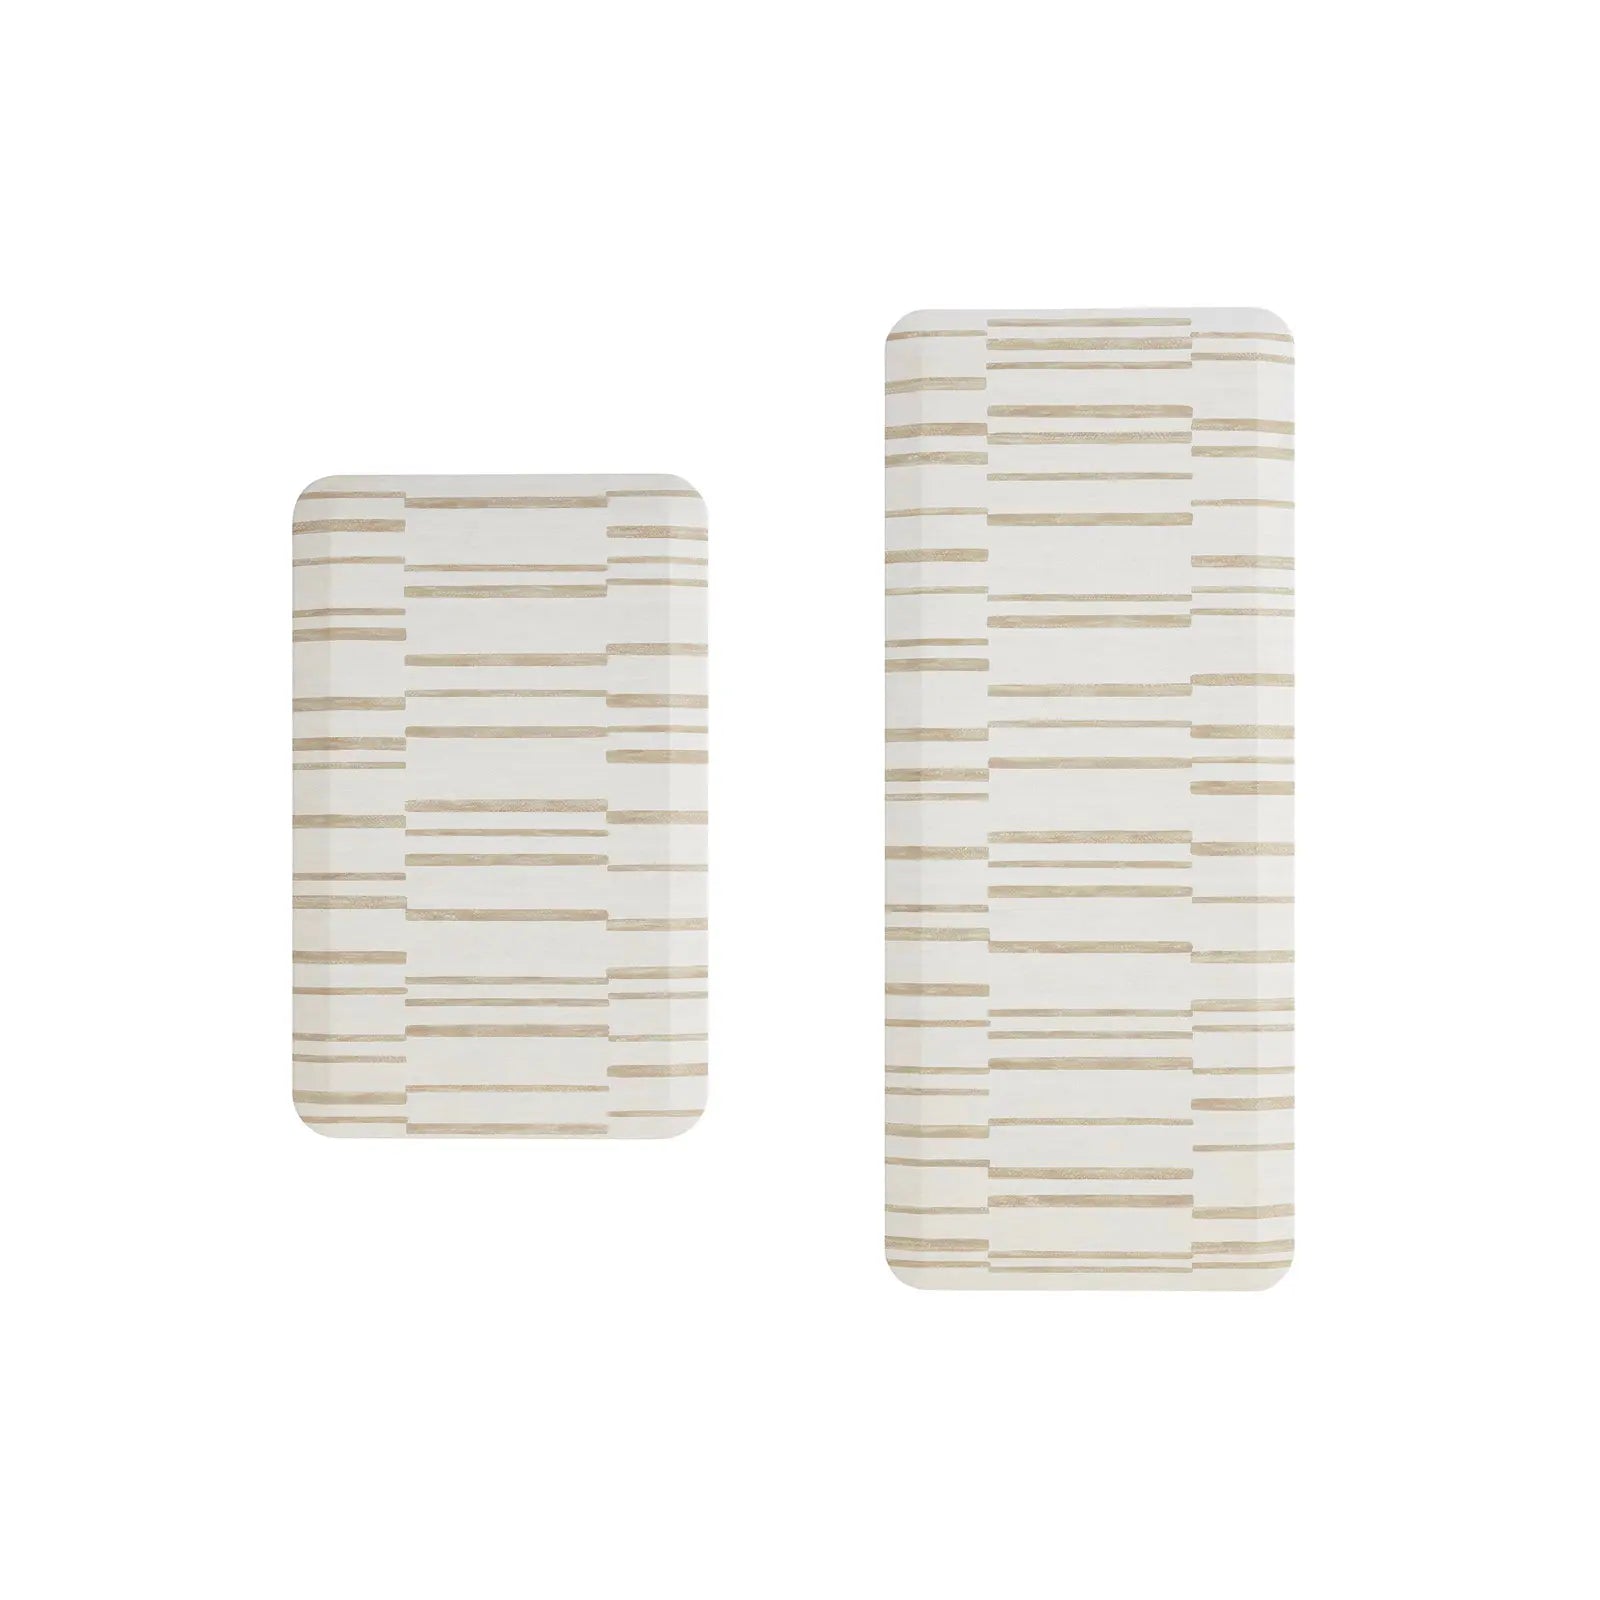 Beige inverted stripe kitchen mat shown in size 22x36 and 22x54